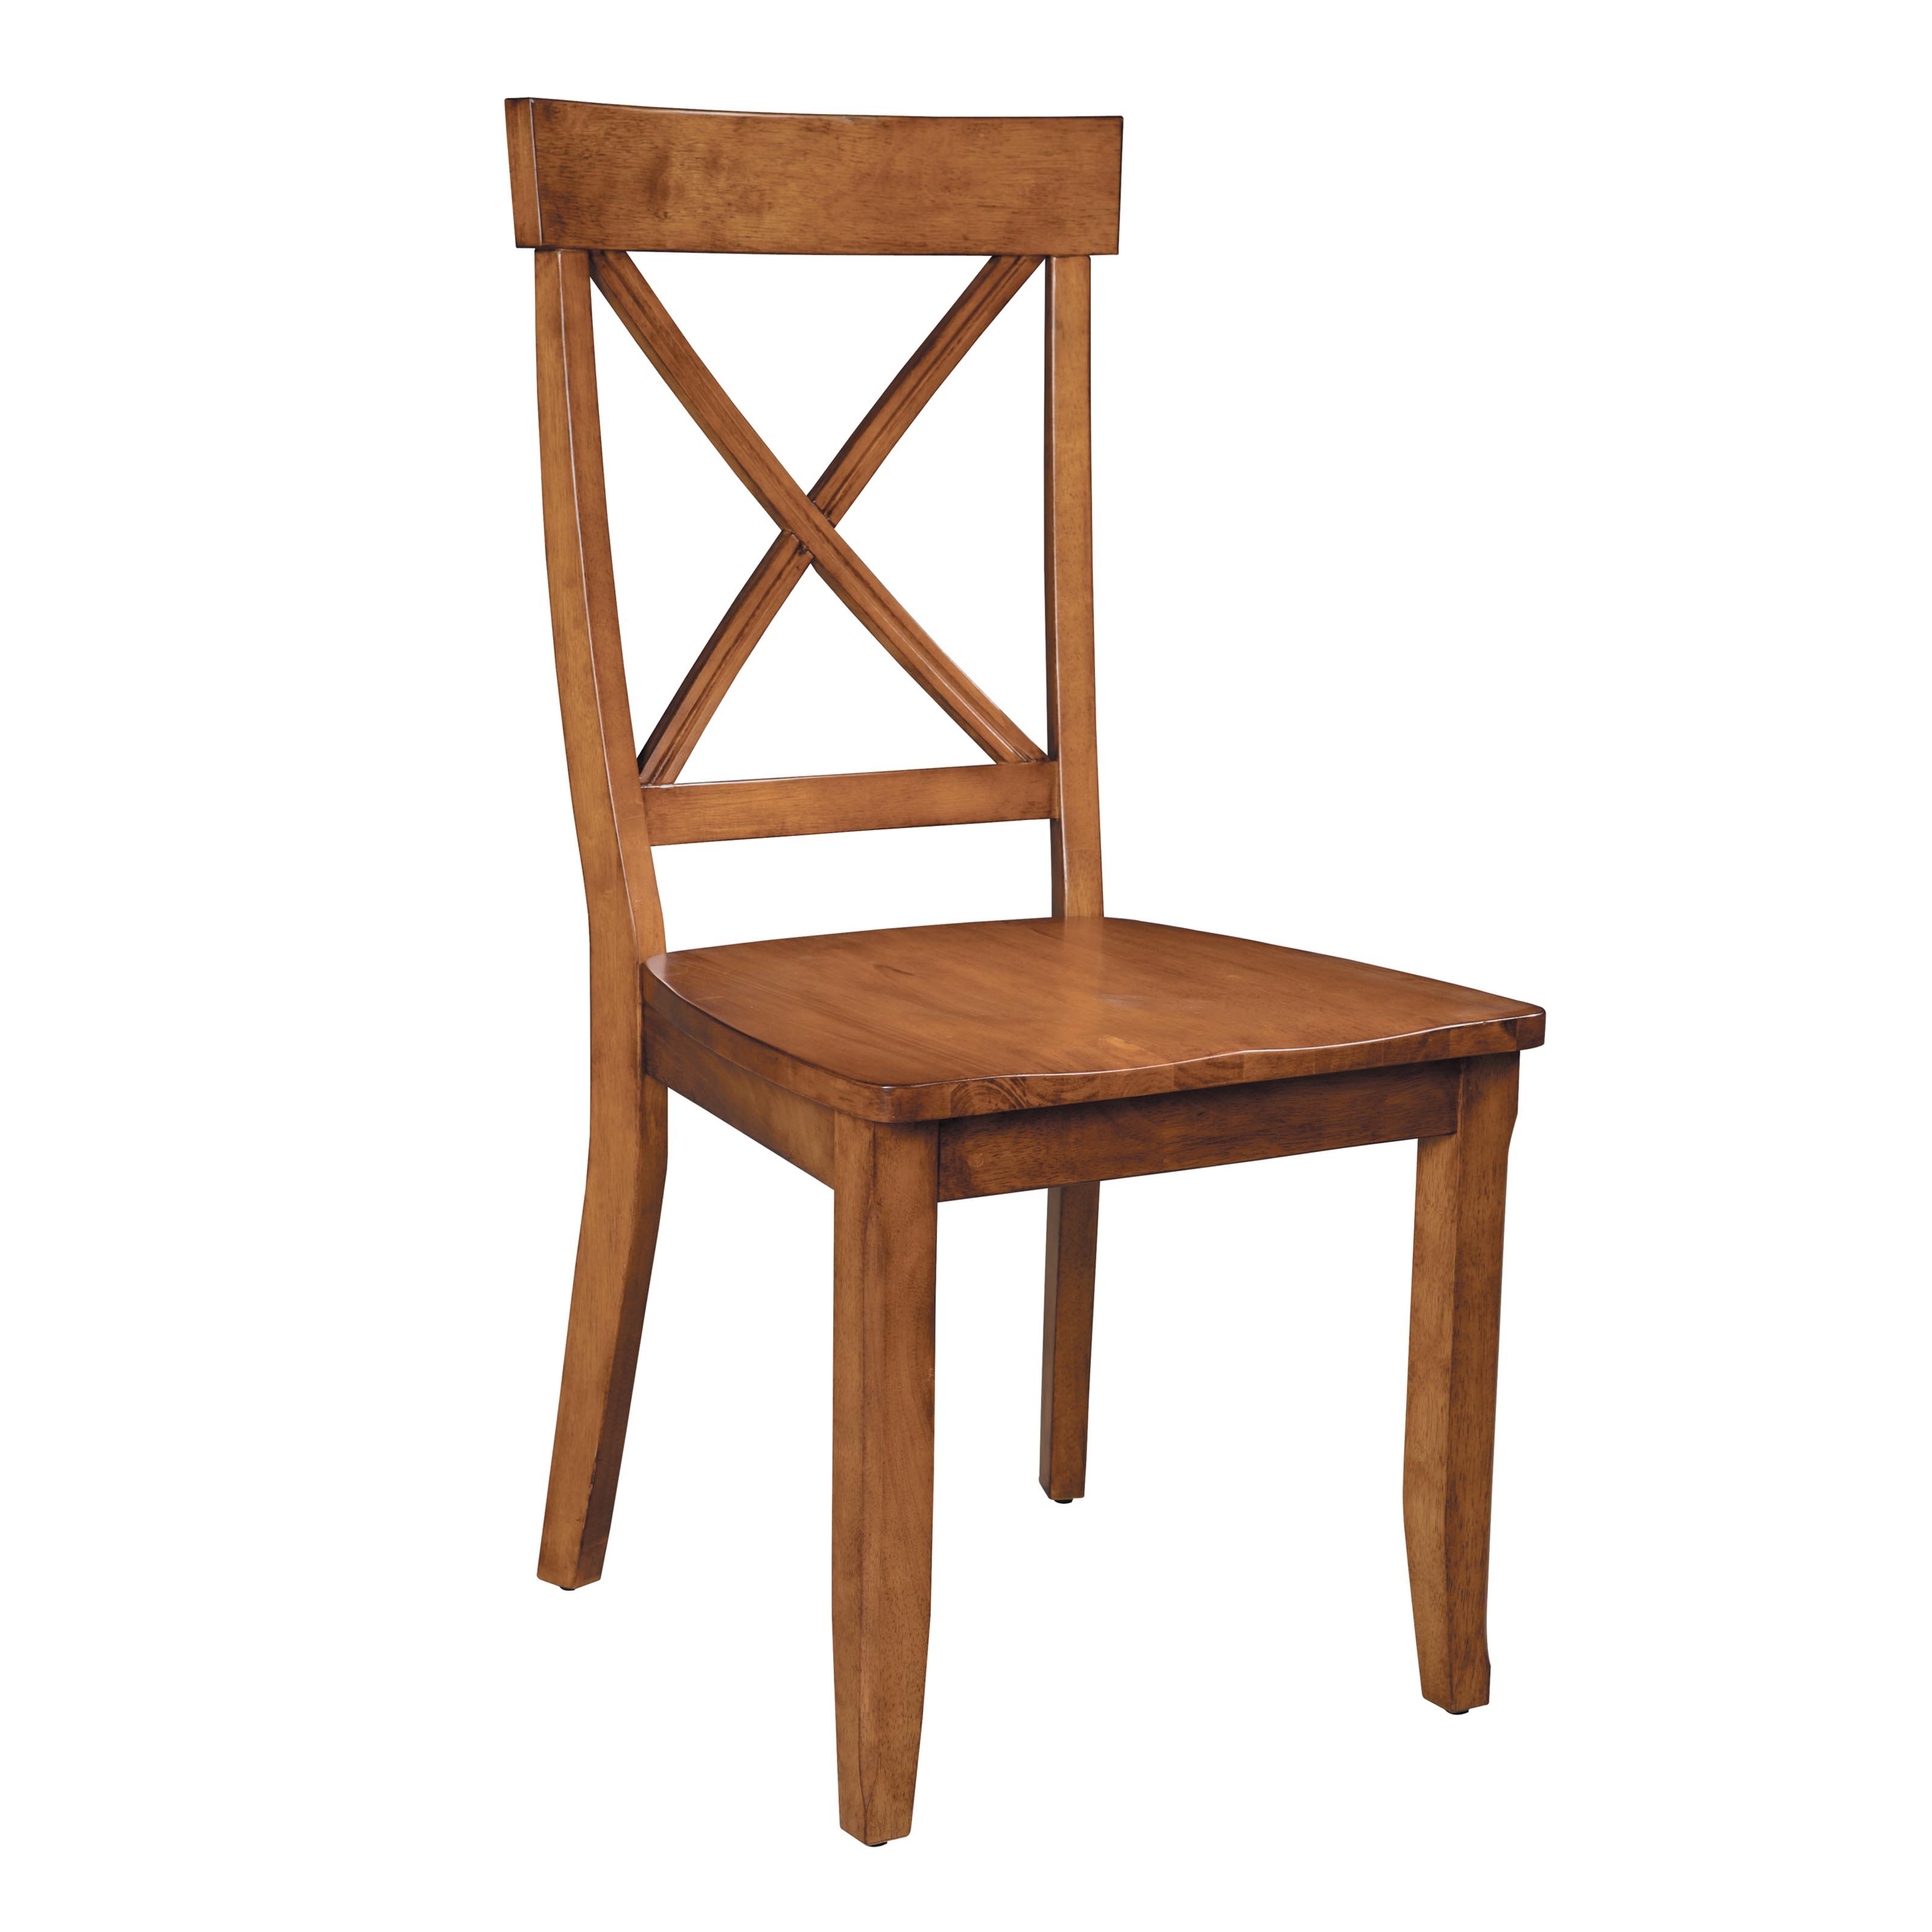 chair clipart kitchen chair